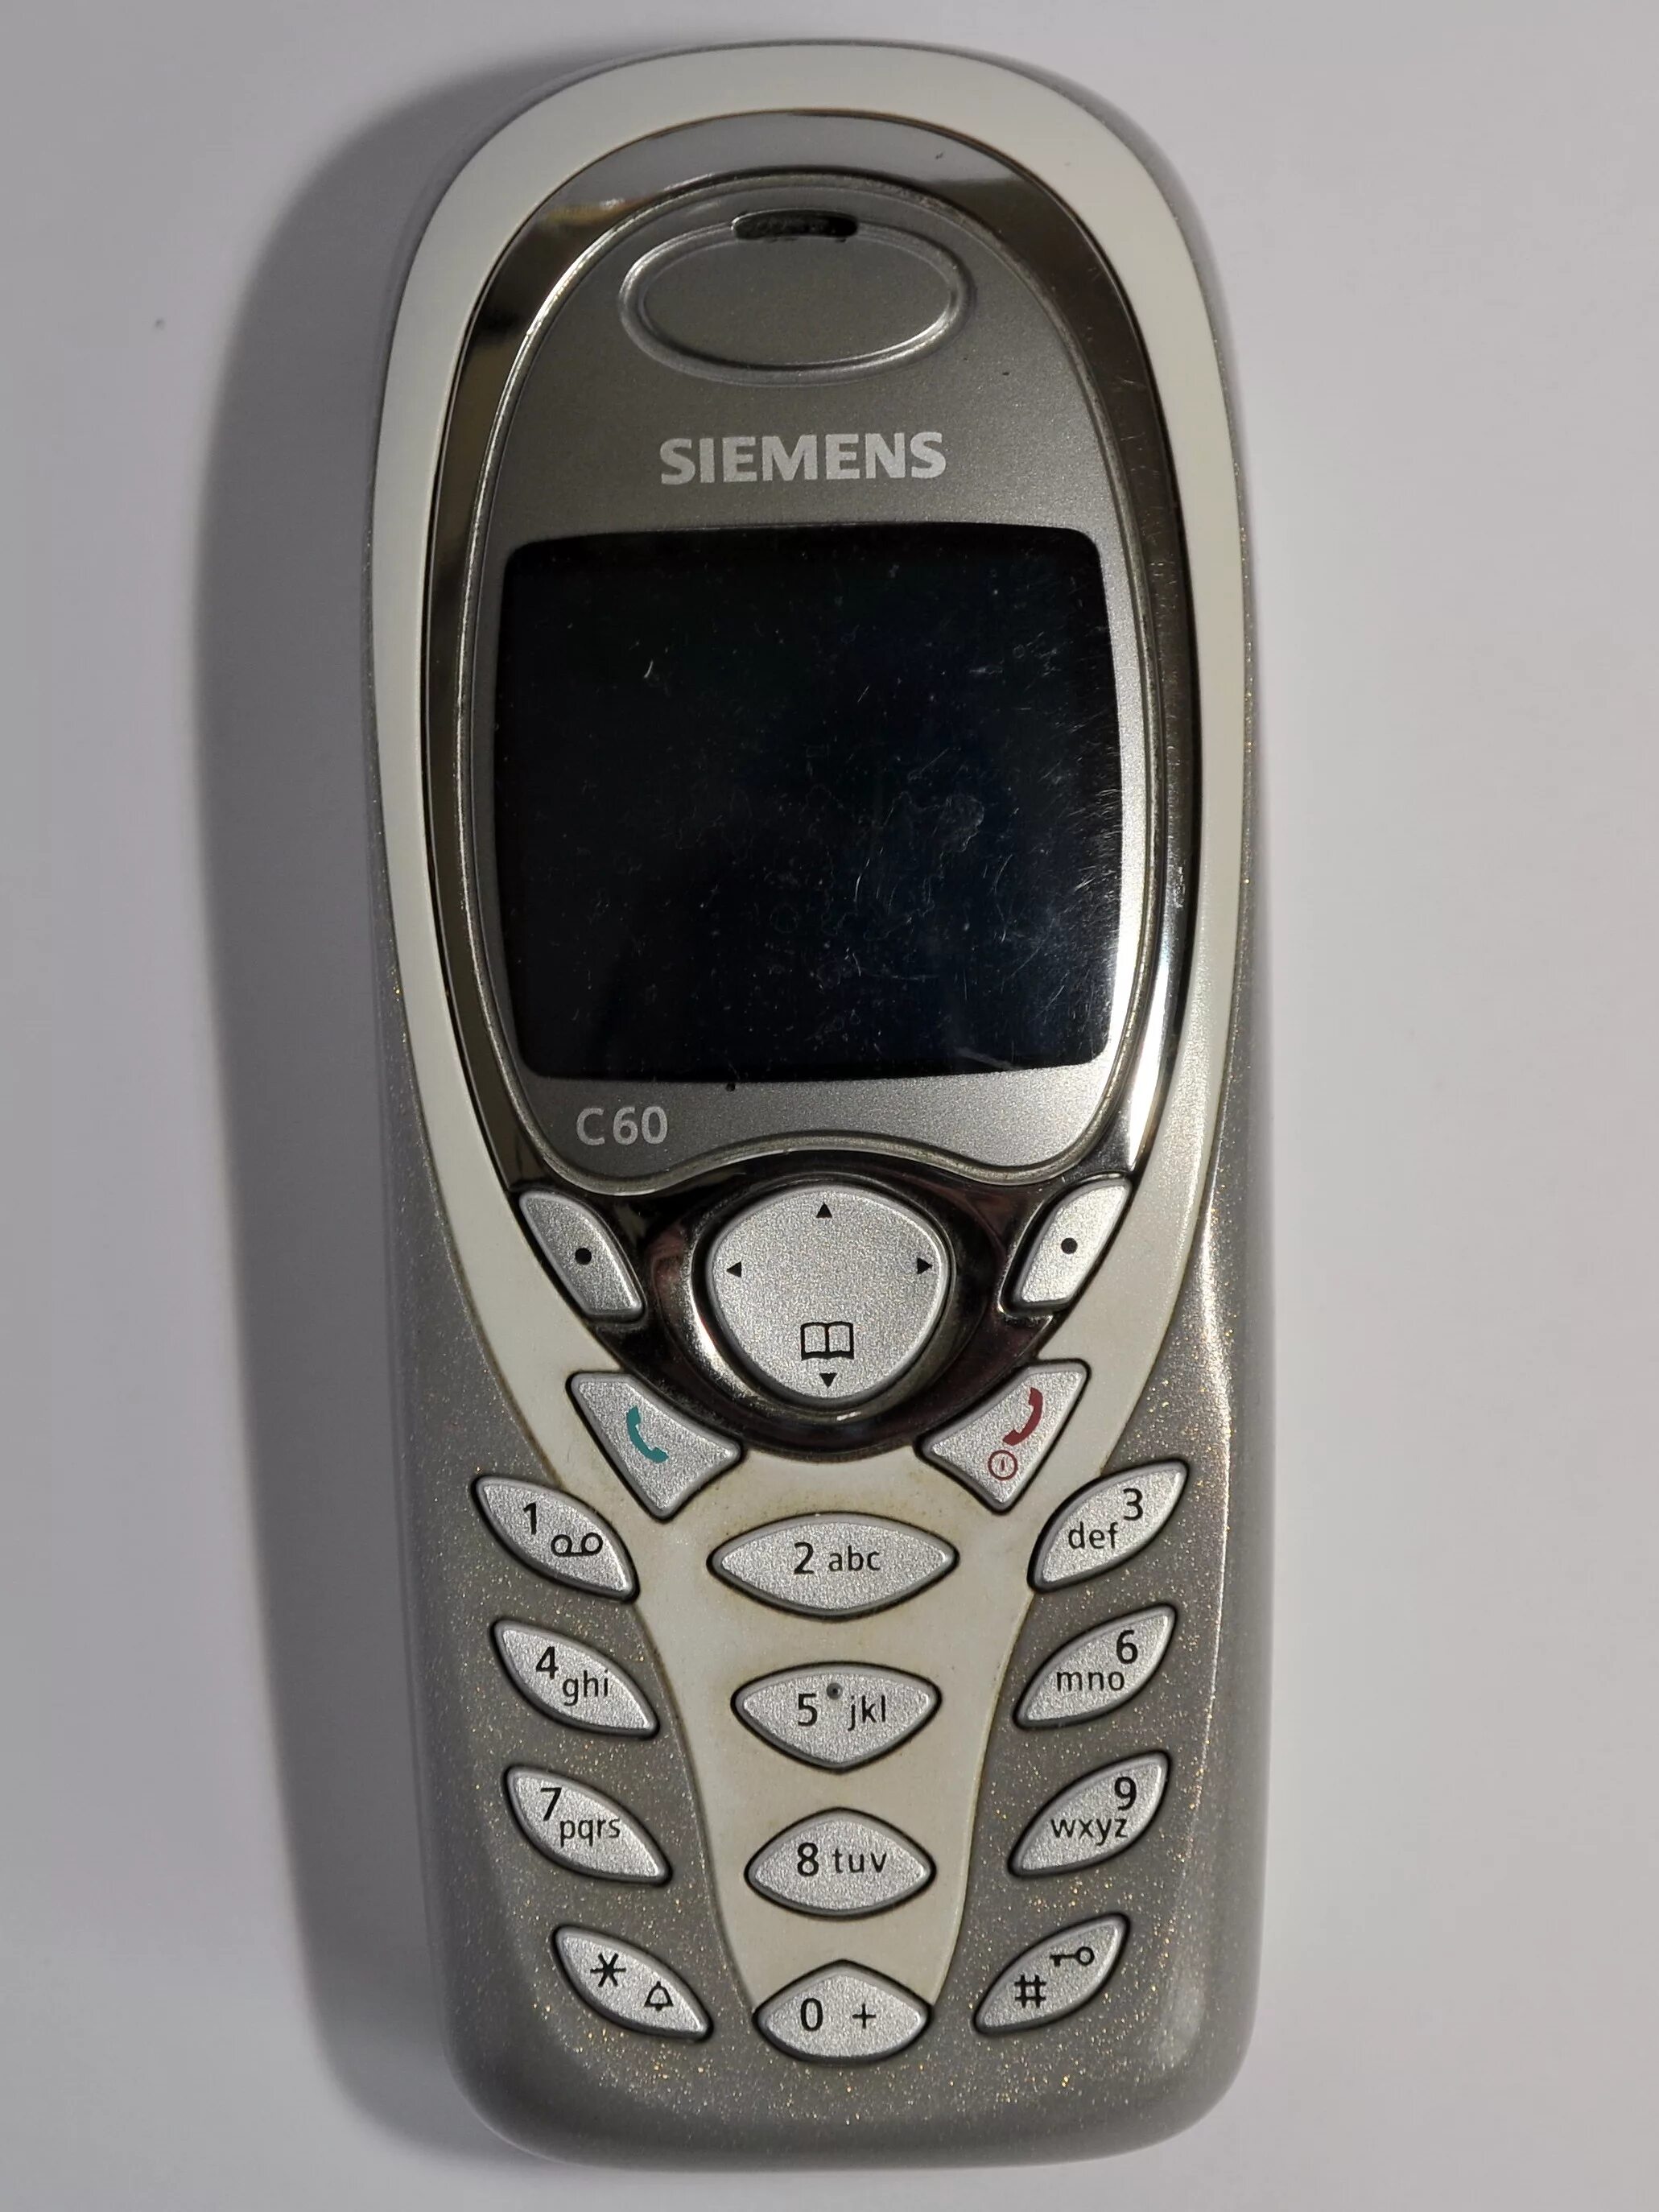 Сименс а60. Телефон Siemens c60. Сименс а60 старый. Сименс c30. Телефон сименс старые